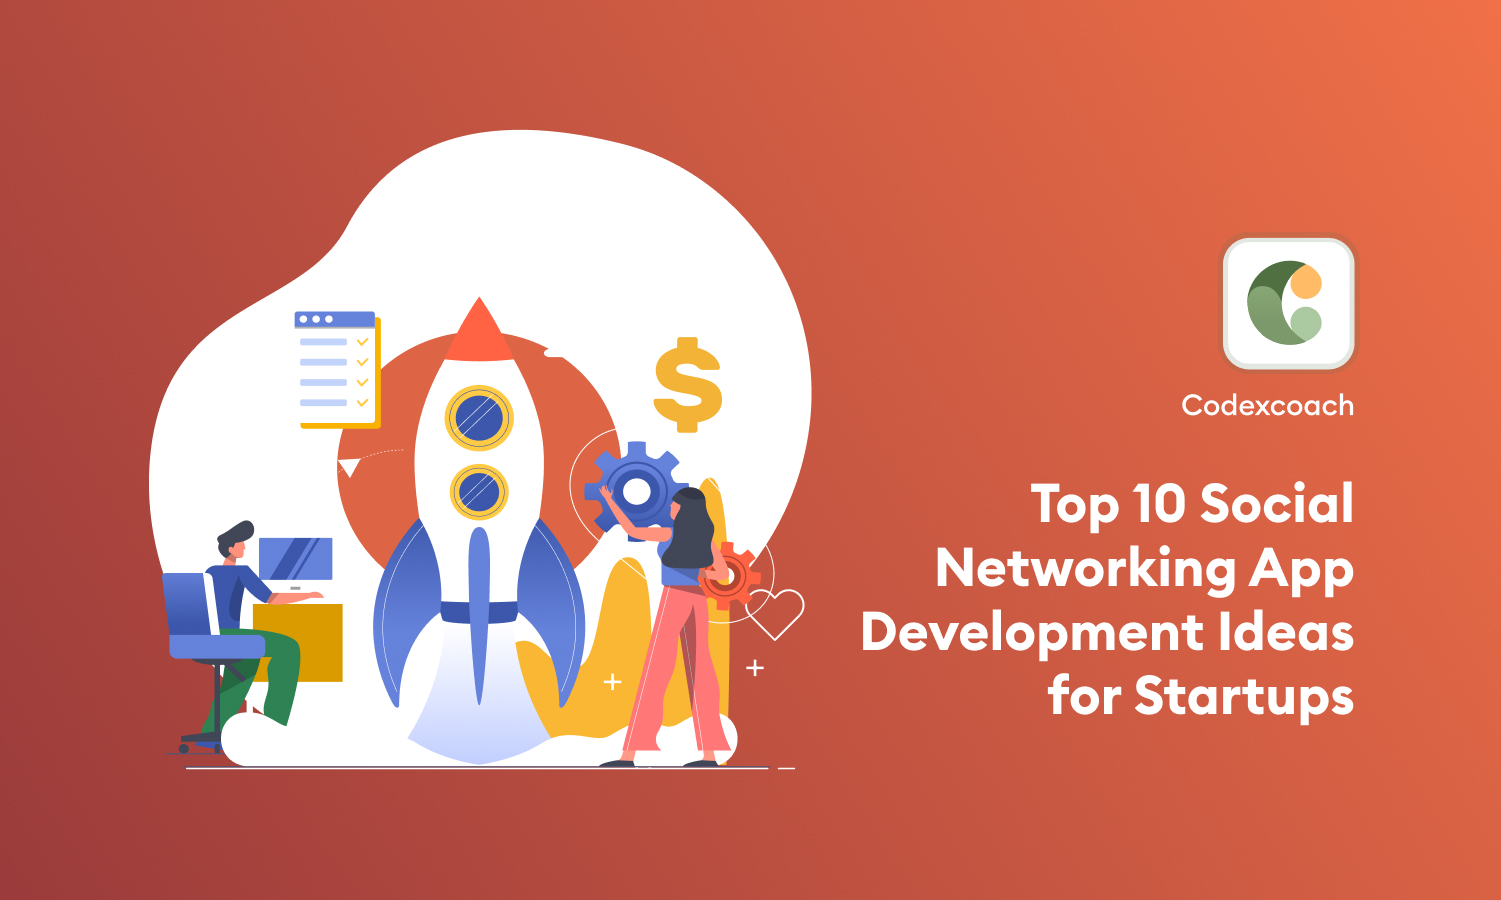 Top 10 Social Networking App Development Ideas for Startups